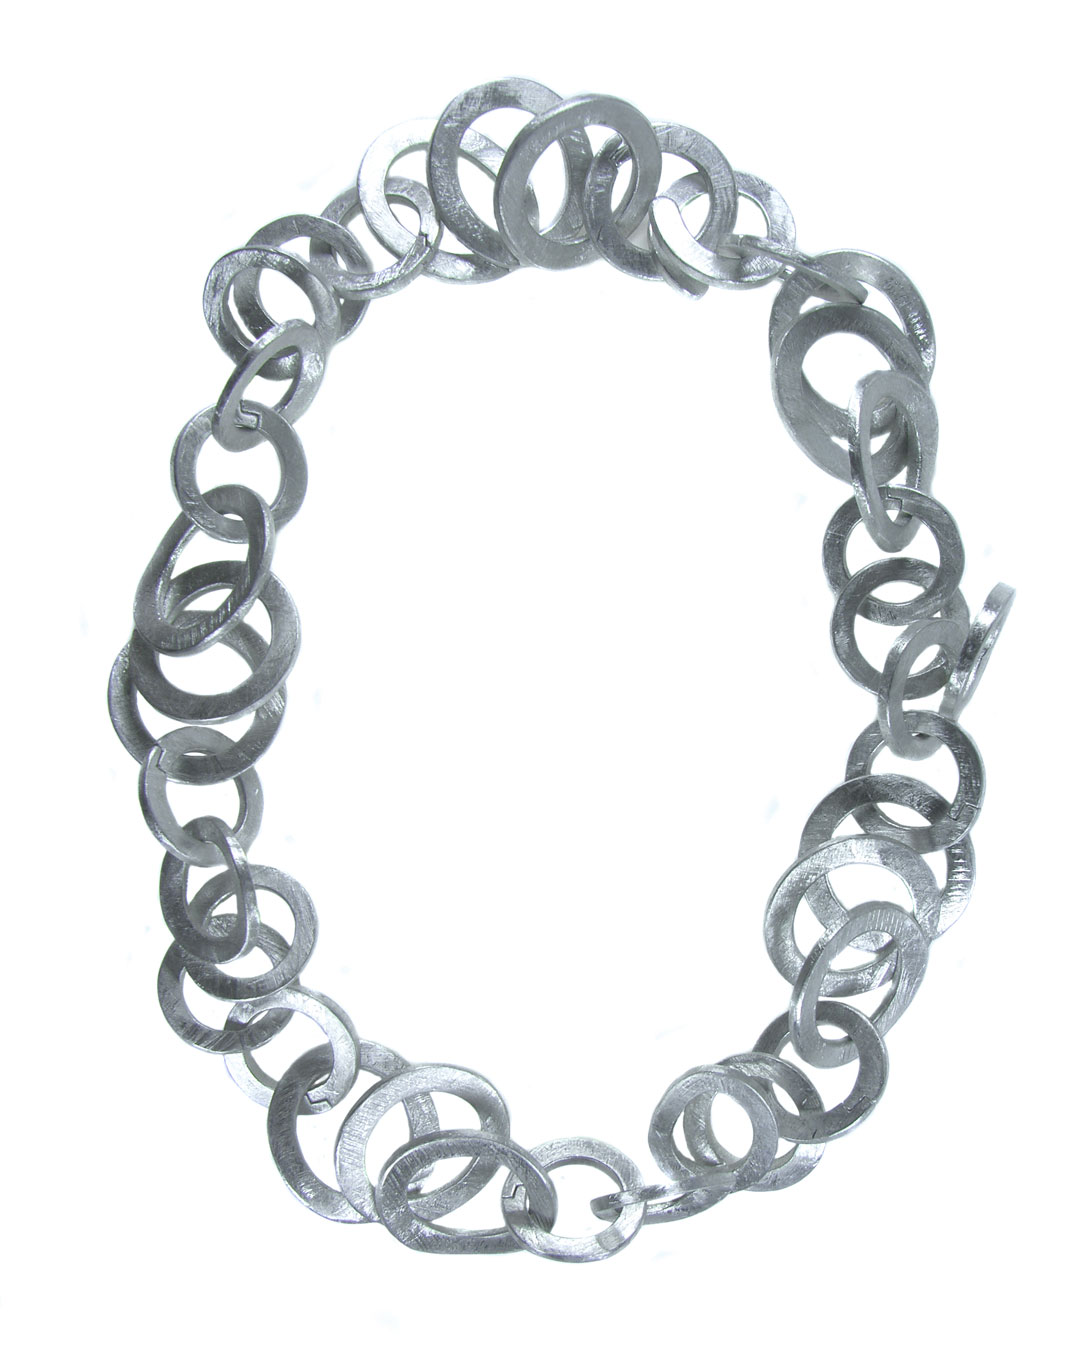 Antje Bräuer, untitled, 2008, necklace; aluminium, ø 250 mm, €1865